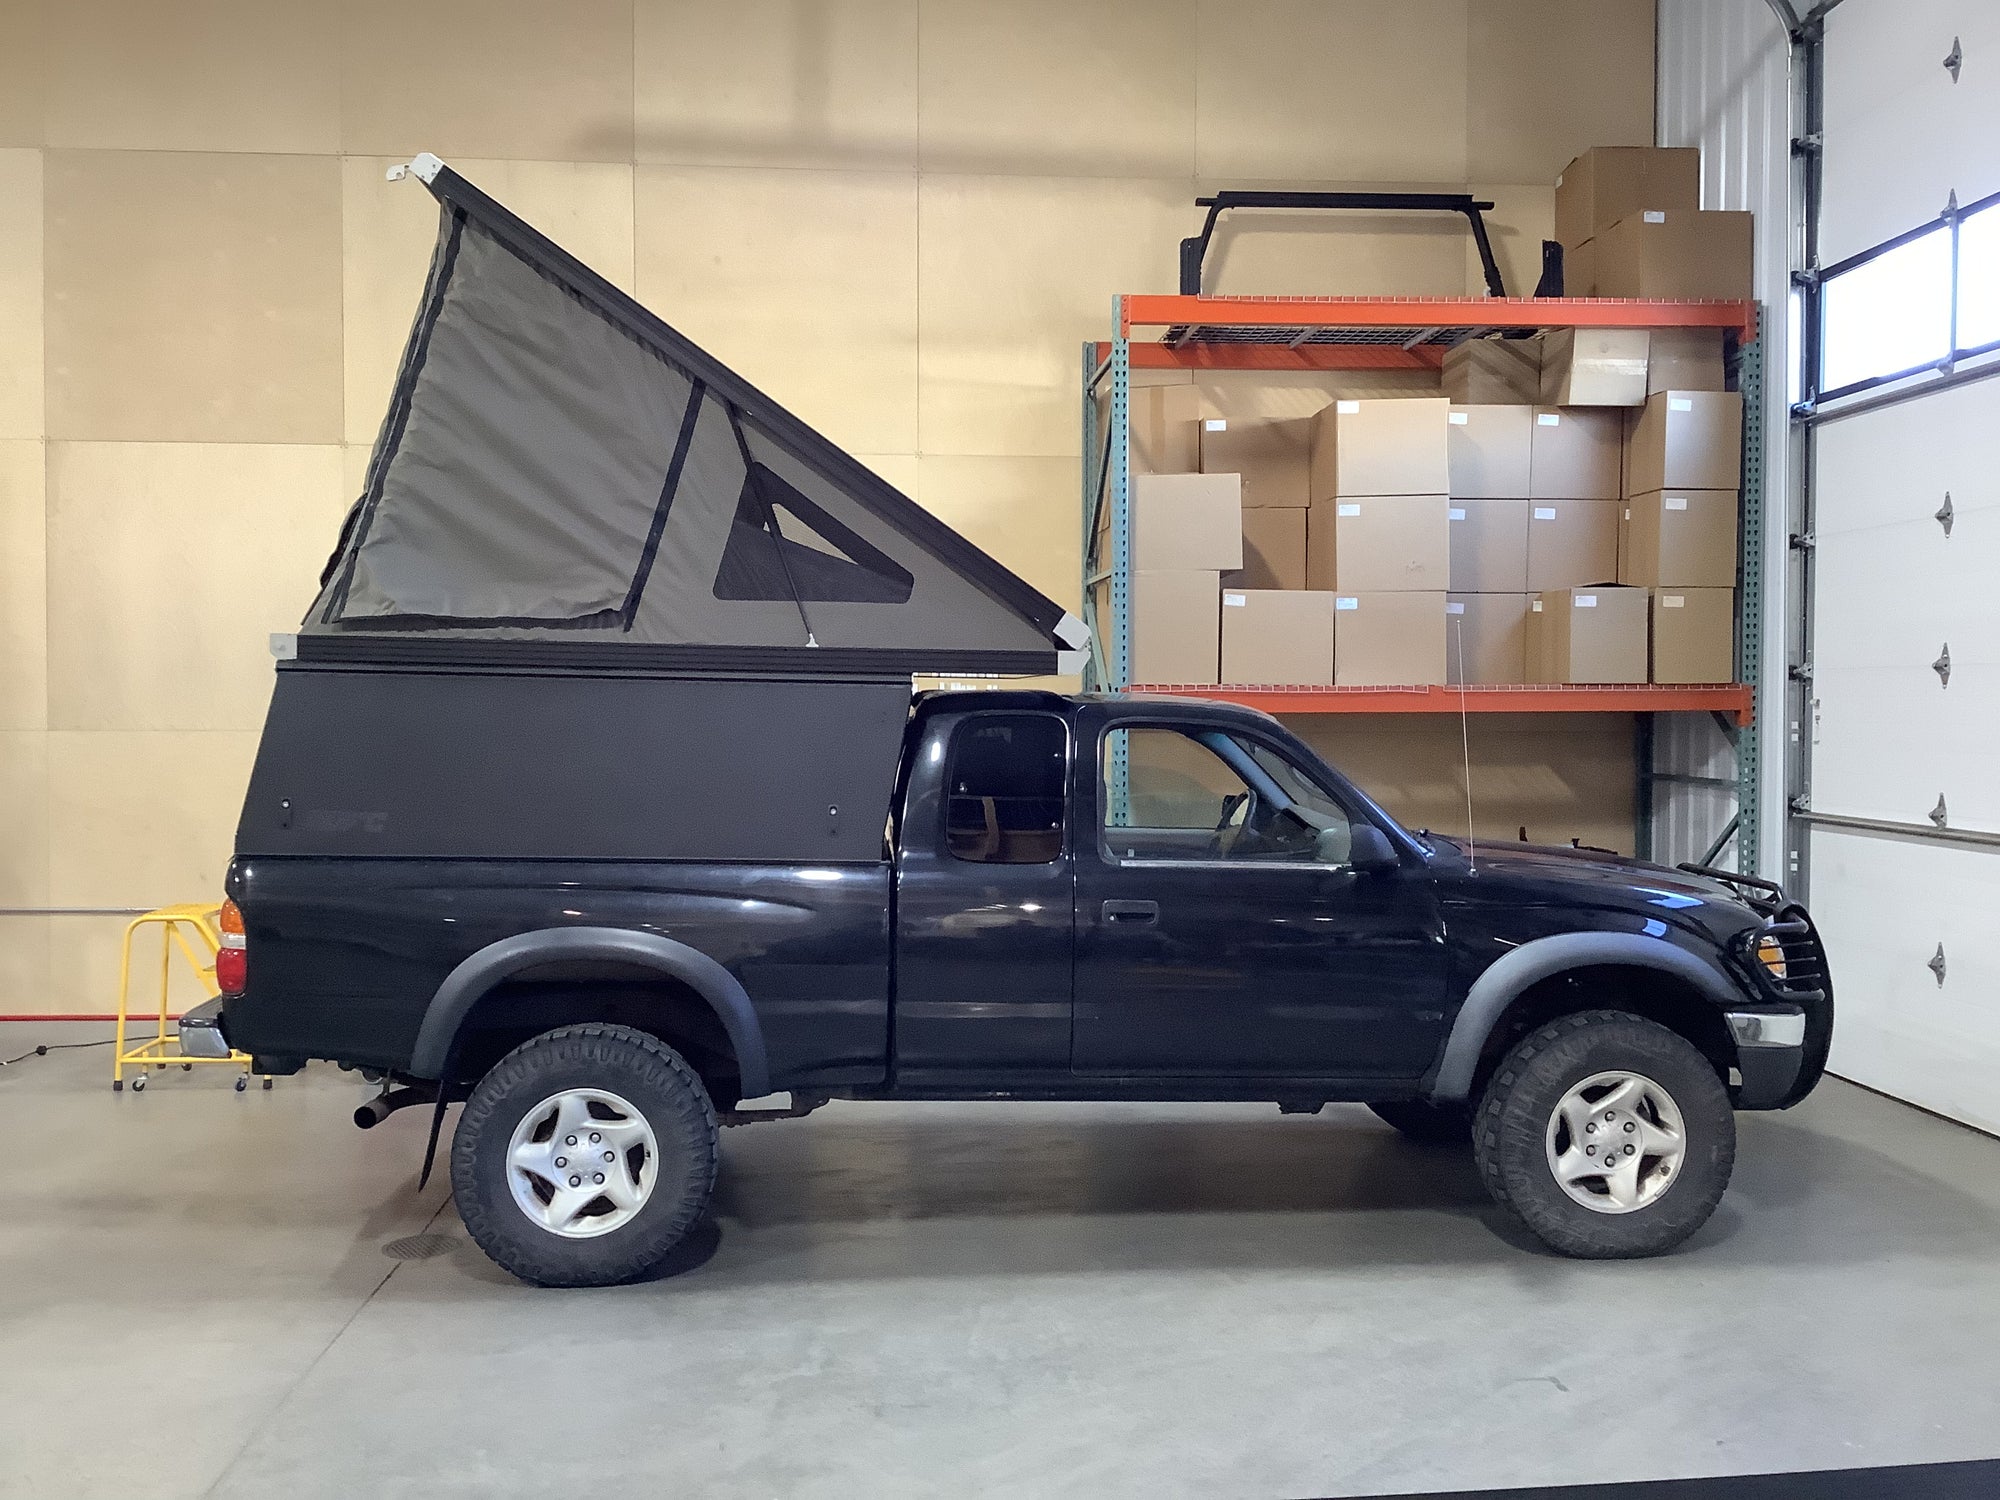 2001 Toyota Tacoma Camper - Build #3539